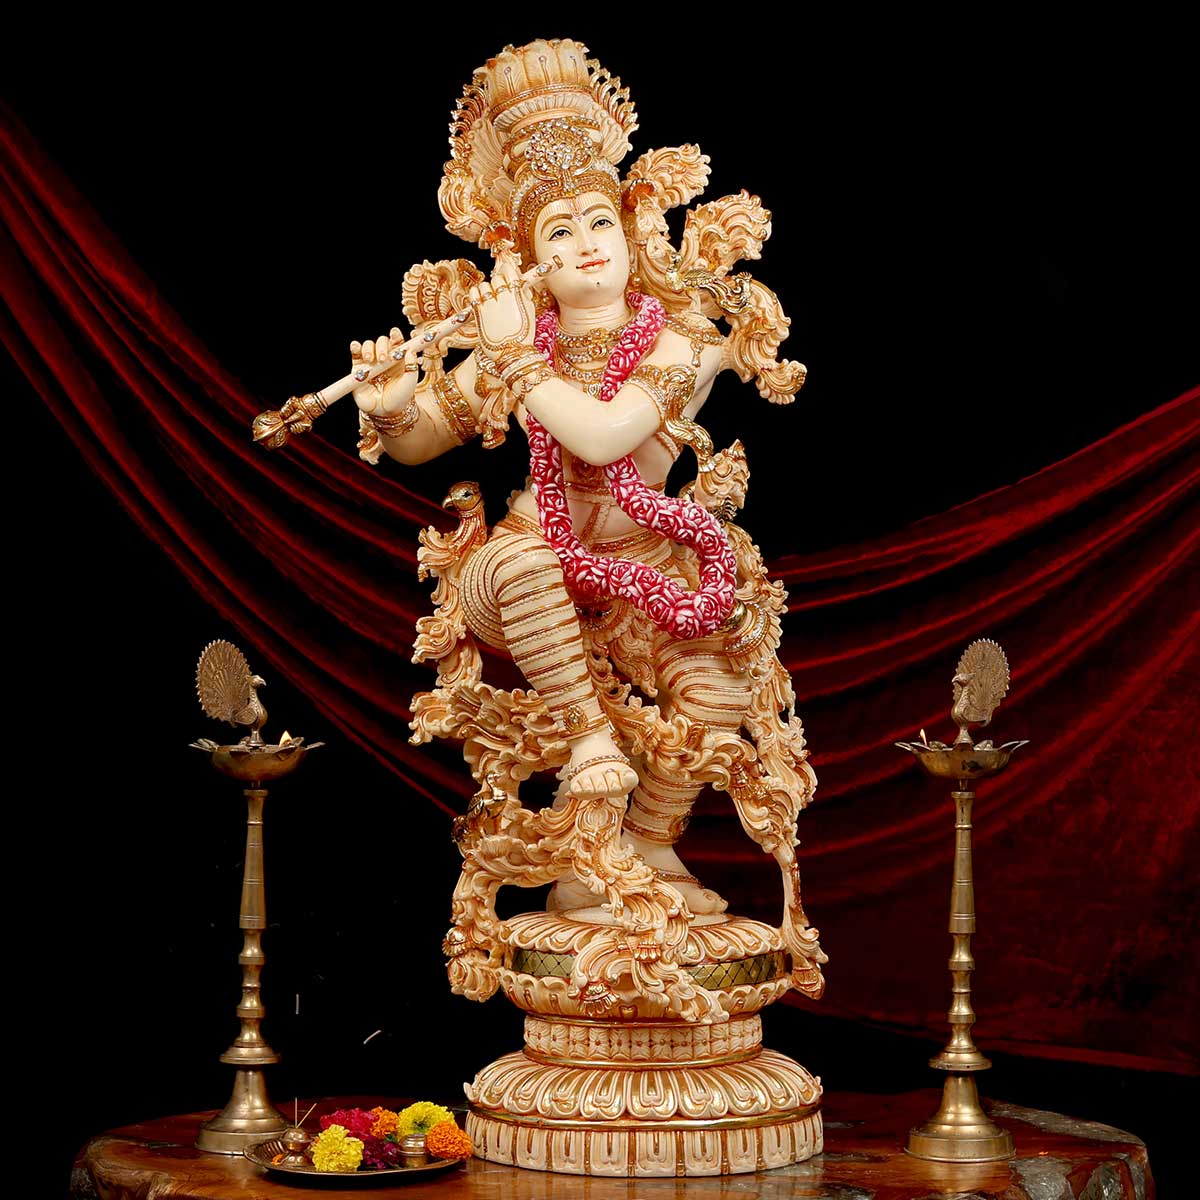 Lord Krishna Playing Bansuri Standing Idol made of Soft Marble - 22 x 15x 48 Inch , 51.5 Kg